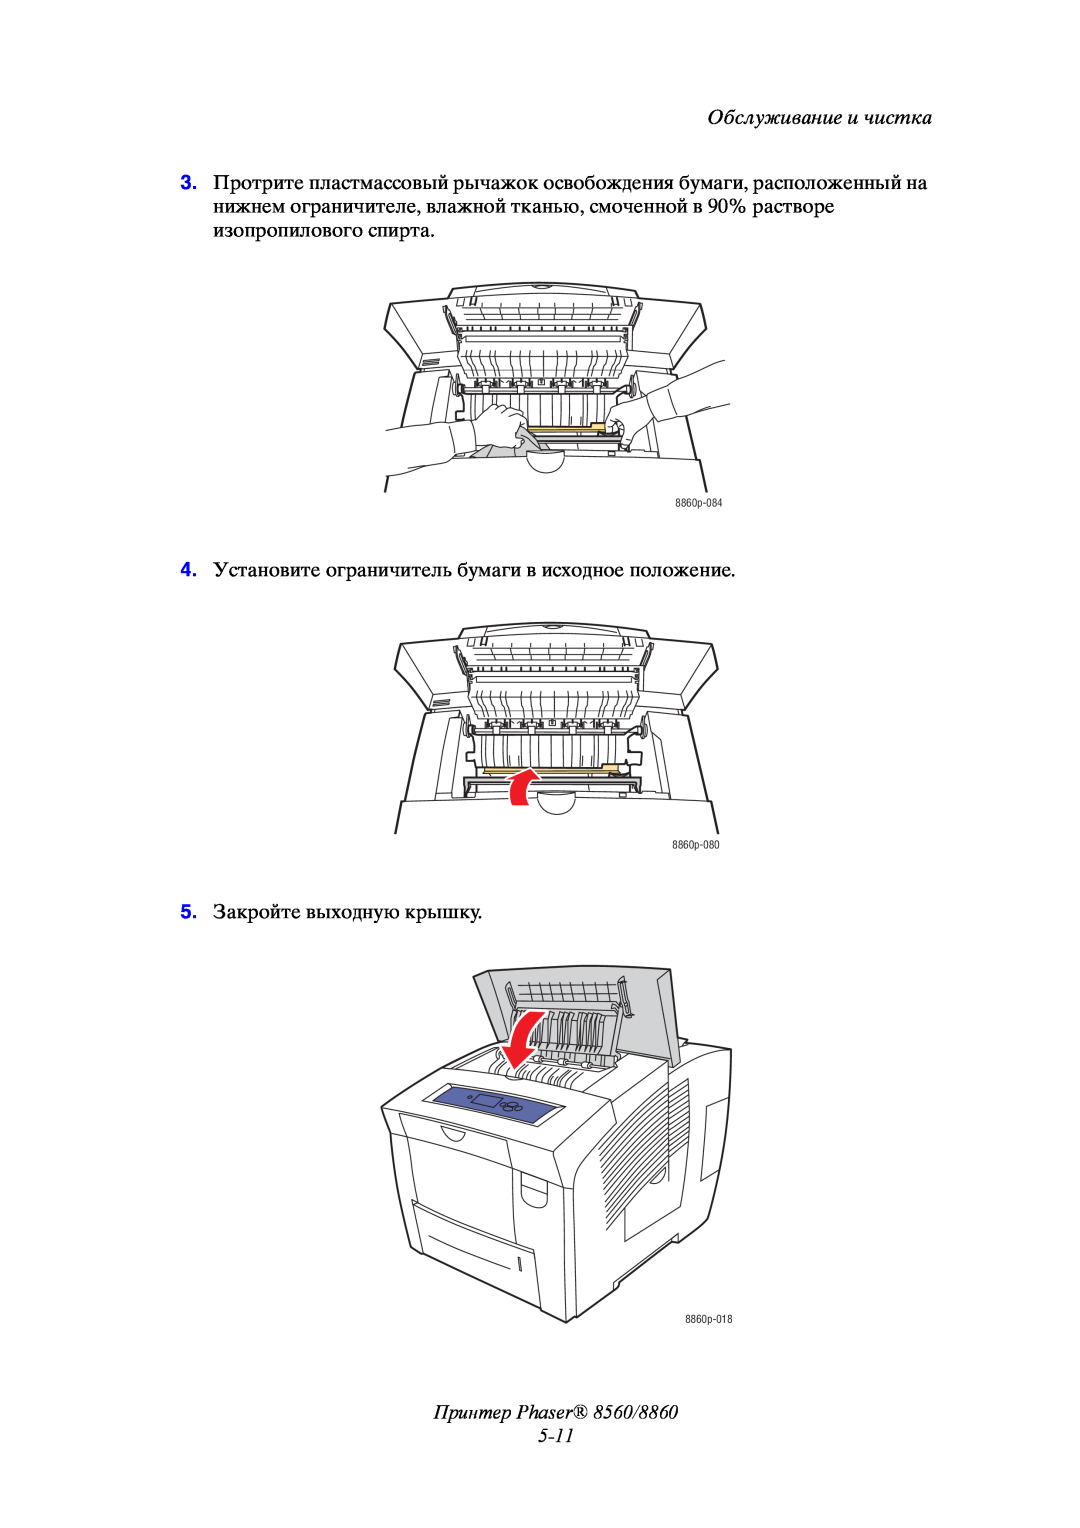 Xerox manual Принтер Phaser 8560/8860 5-11, Обслуживание и чистка, 8860p-084, 8860p-080, 8860p-018 